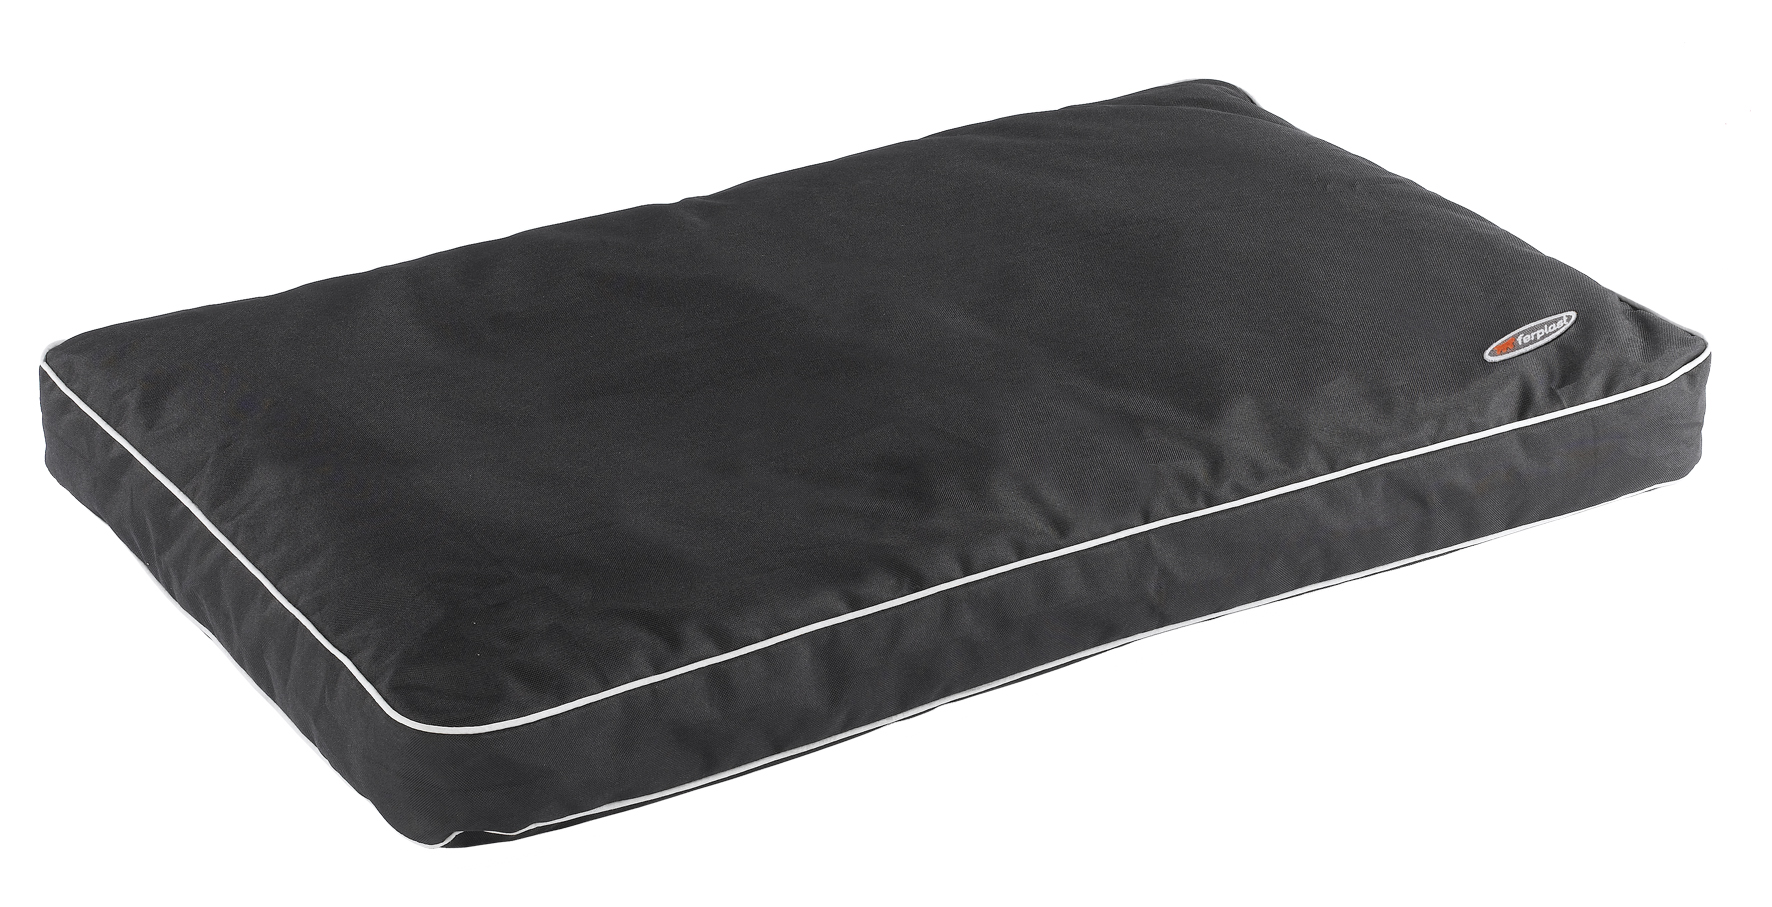 Подушка-лежак для животных POLO 95 черная, со съемным непромокаемым чехлом (нейлон) 60х95х8 см, Ferplast